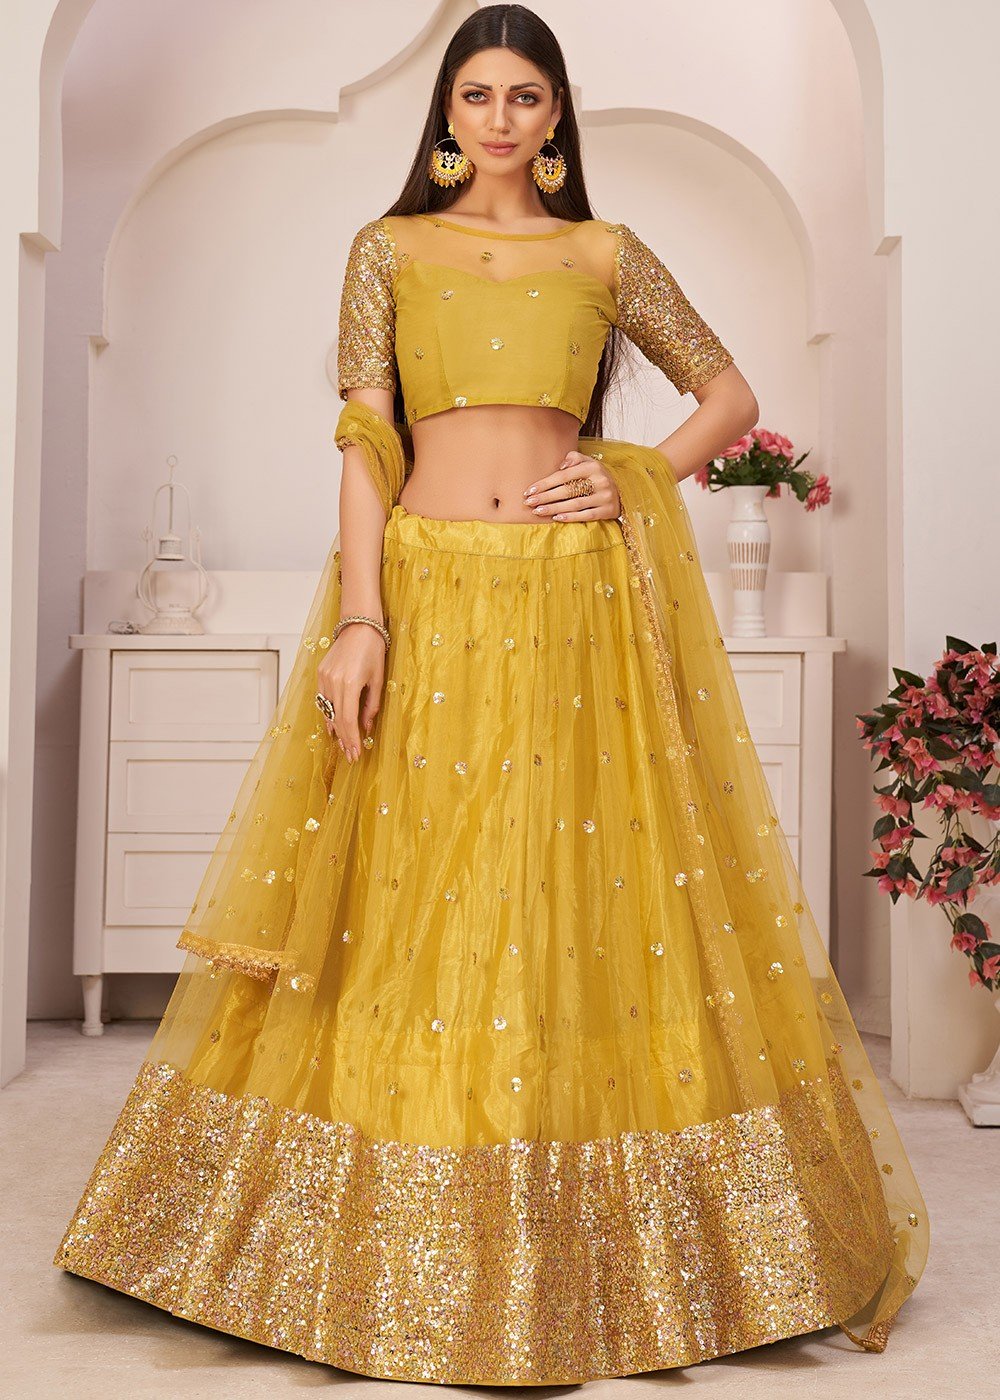 Desire | Lehenga simple, Indian wedding dress, Wedding outfit